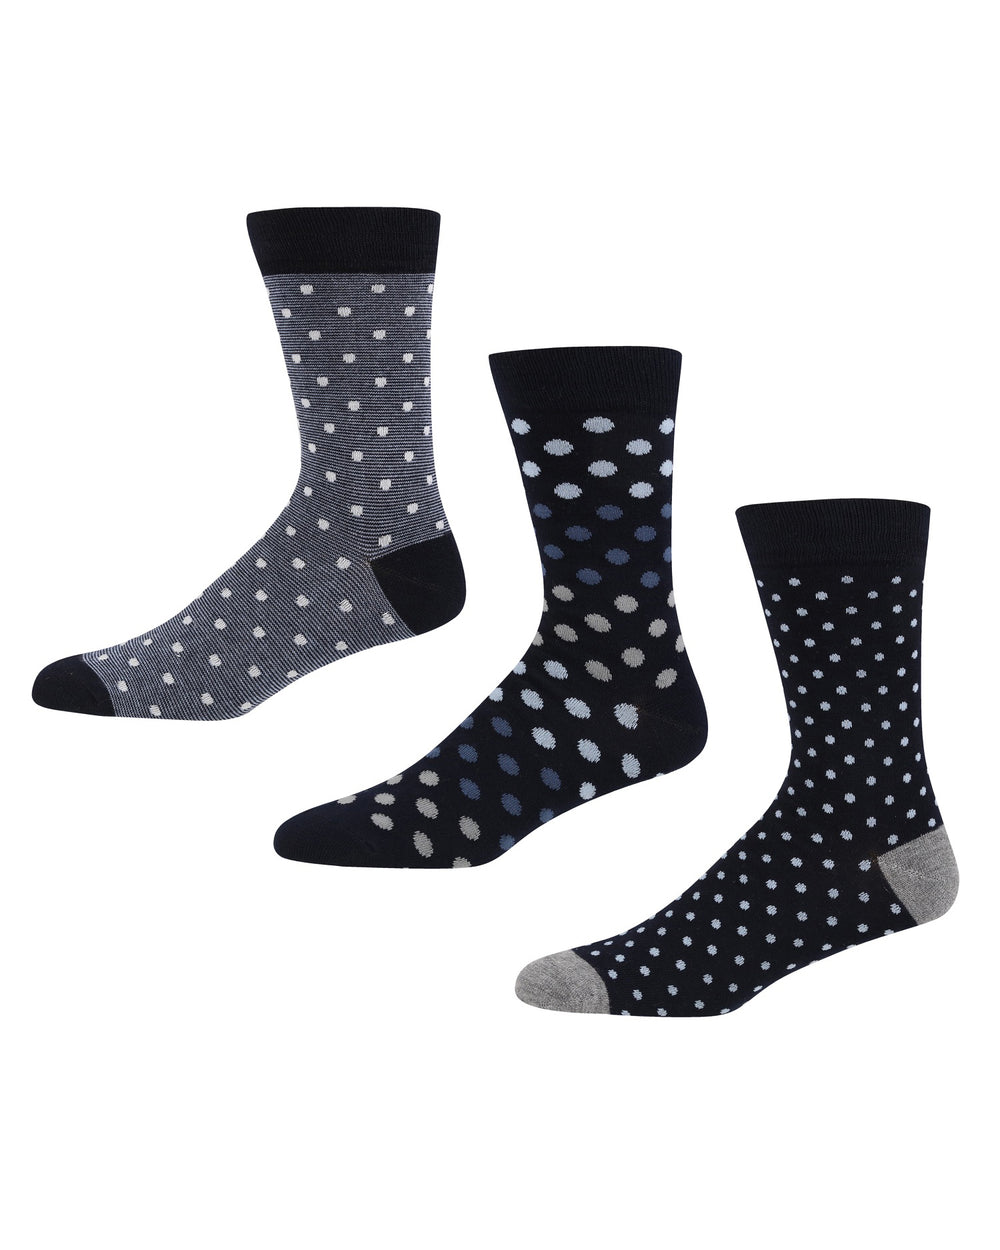 Queens Logic Men's 3-Pack Socks - Navy/Blue Spots